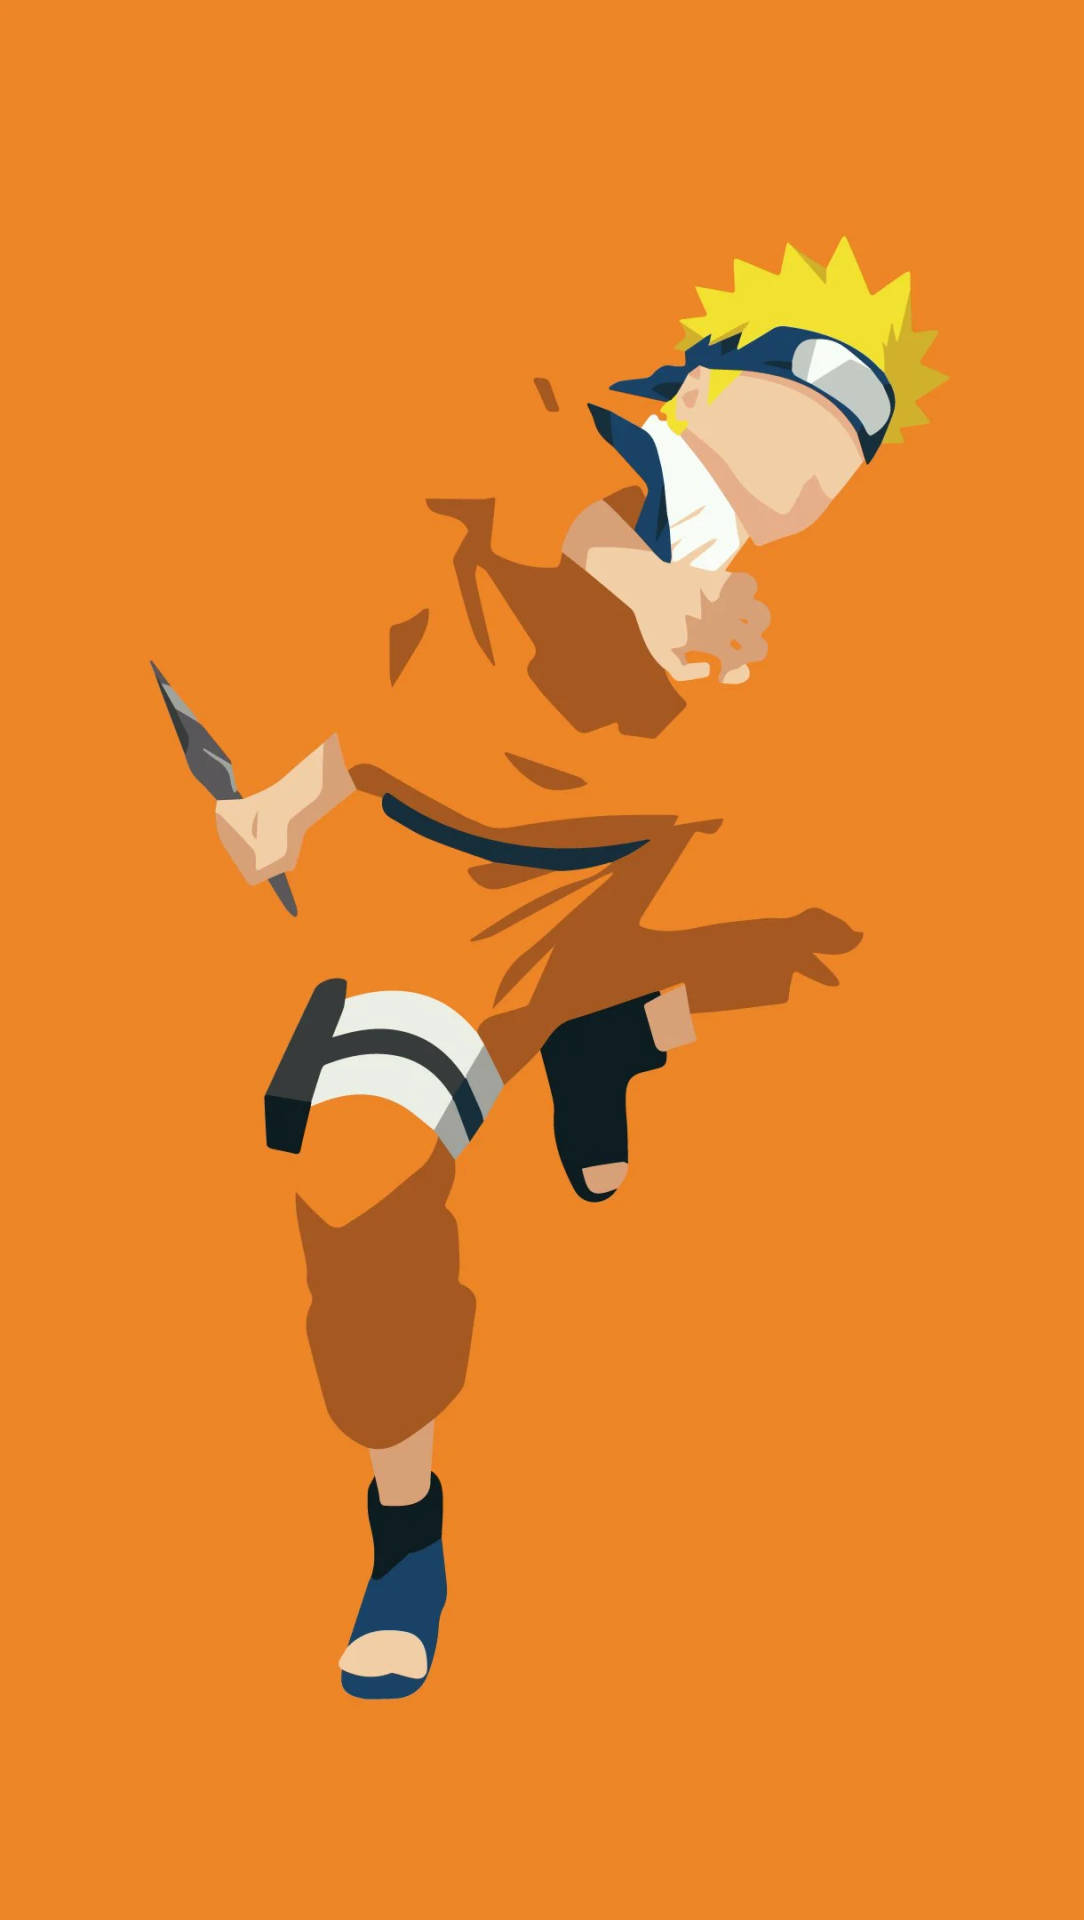 Artevectorial De Naruto En Color Naranja Para Móviles En 4k. Fondo de pantalla